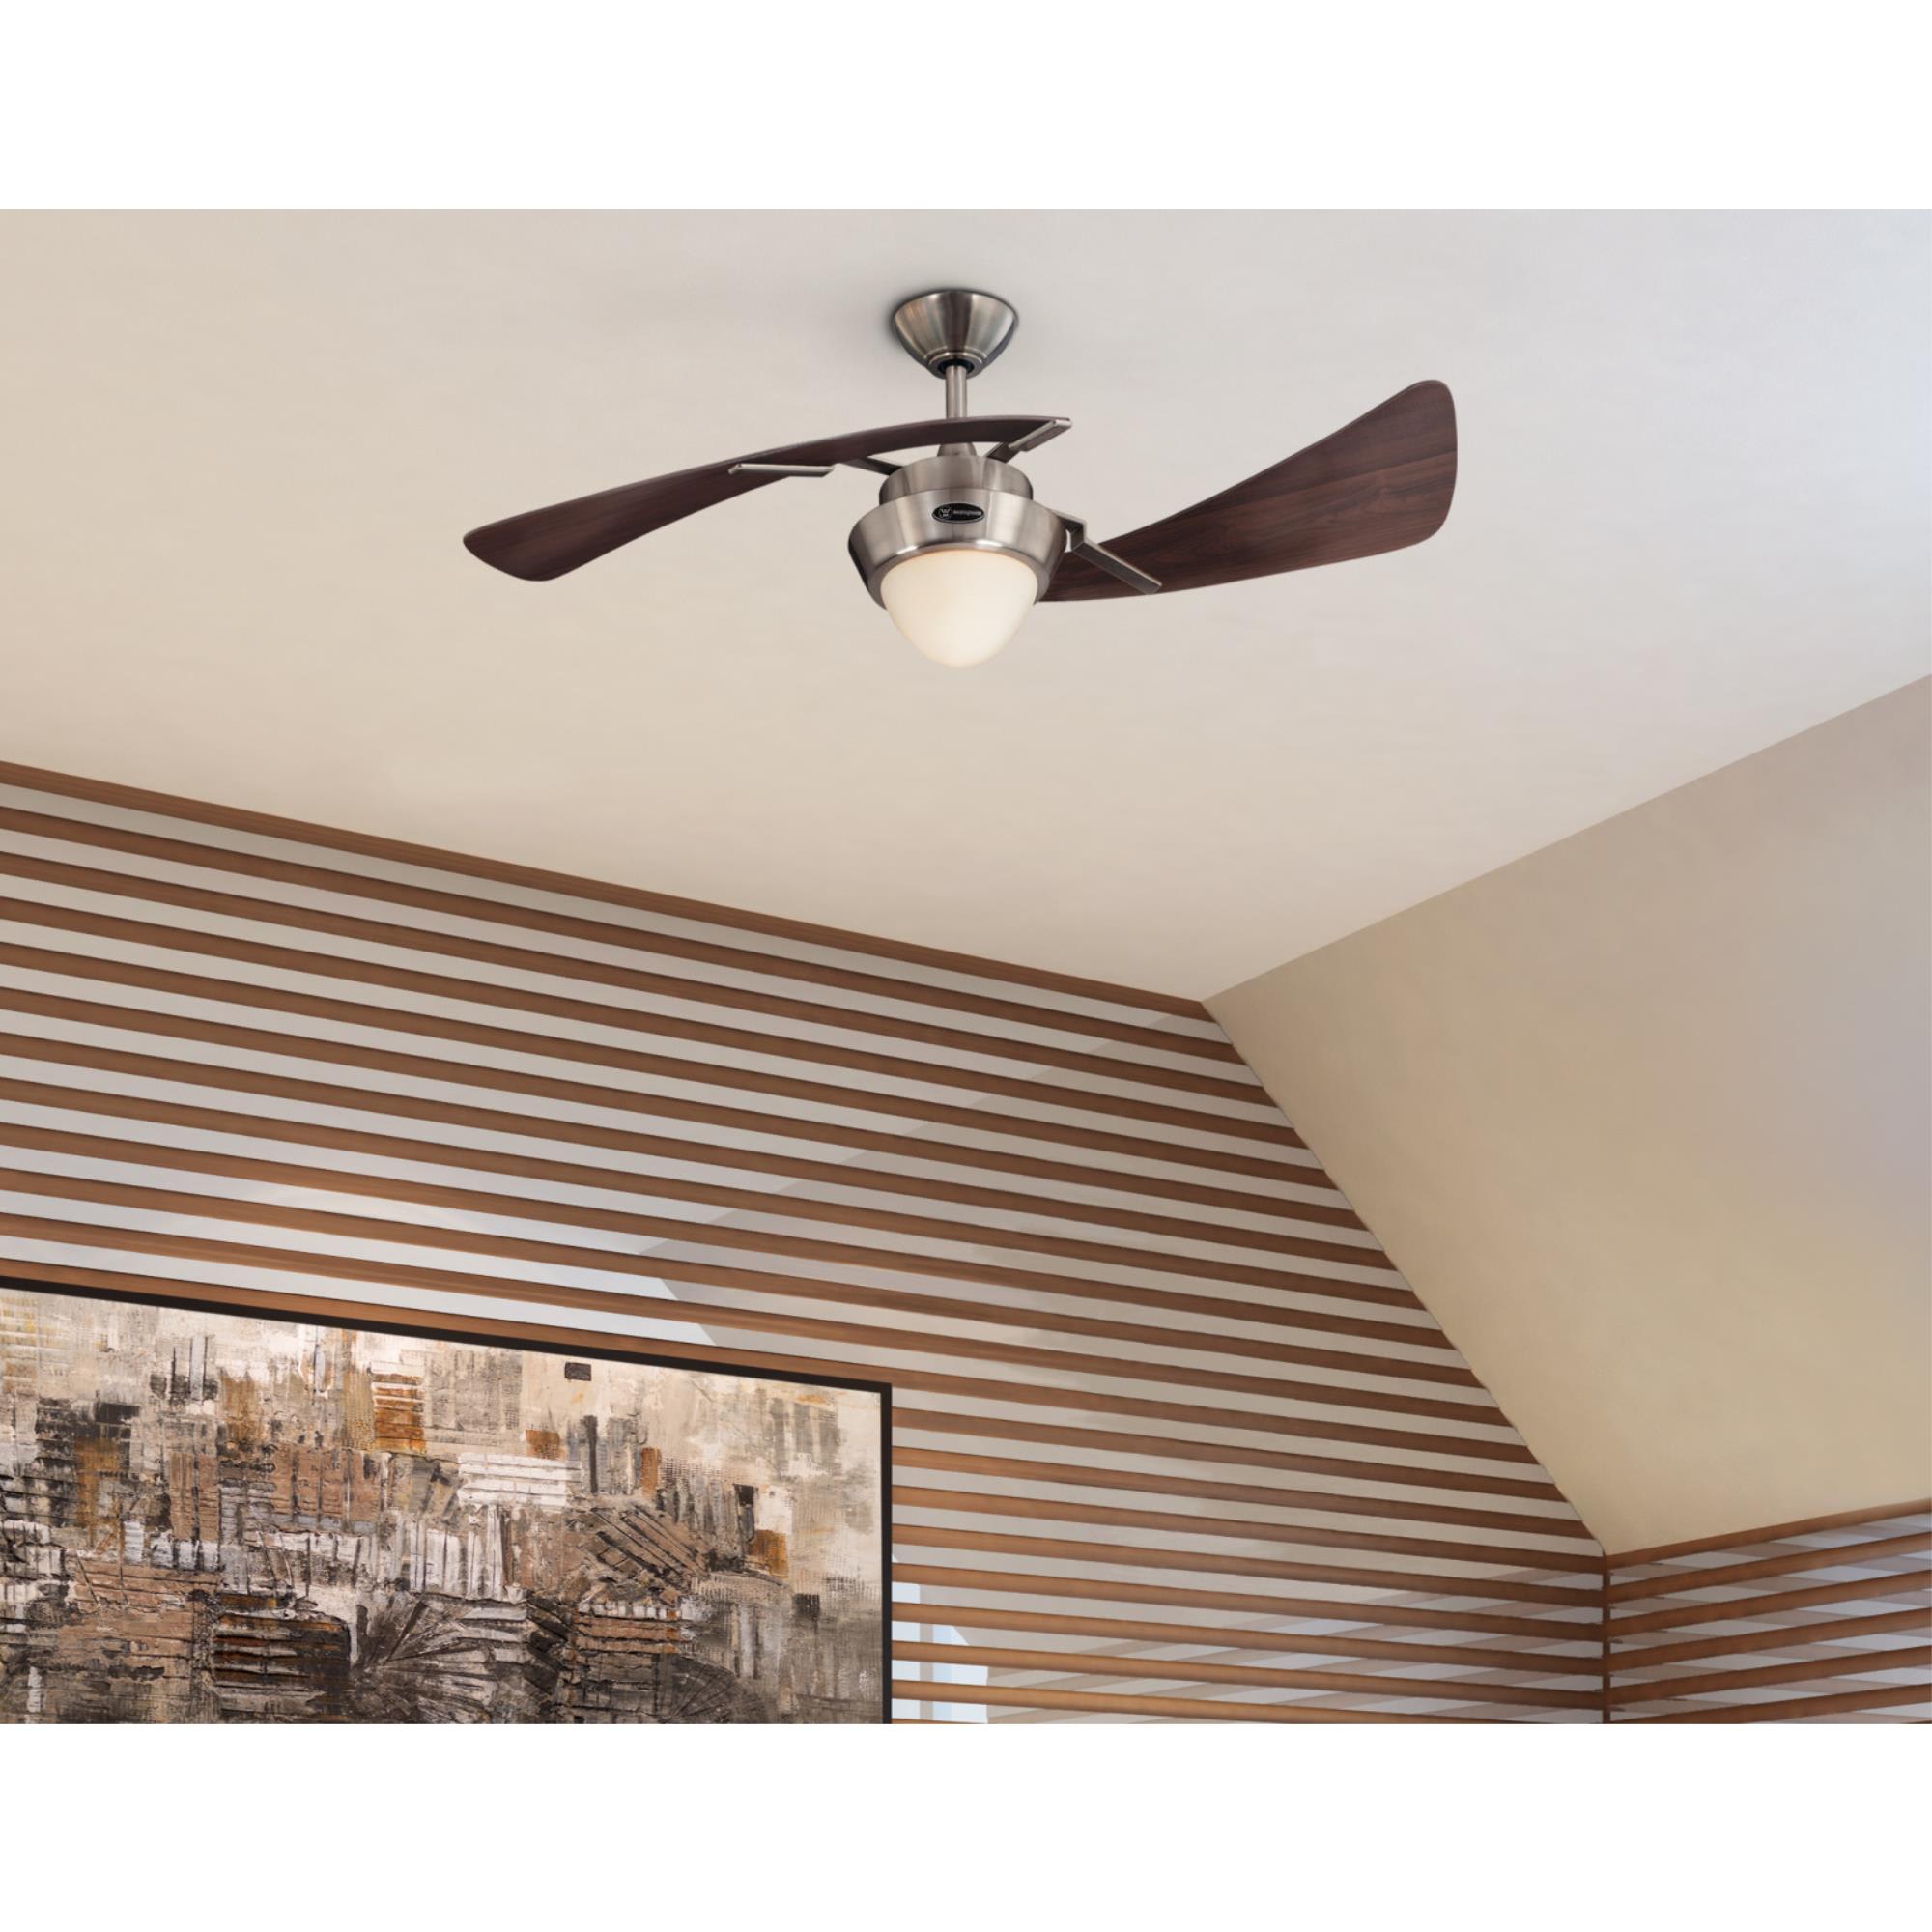 Details about   7216100 Westinghouse 48" Ceiling fan blade 